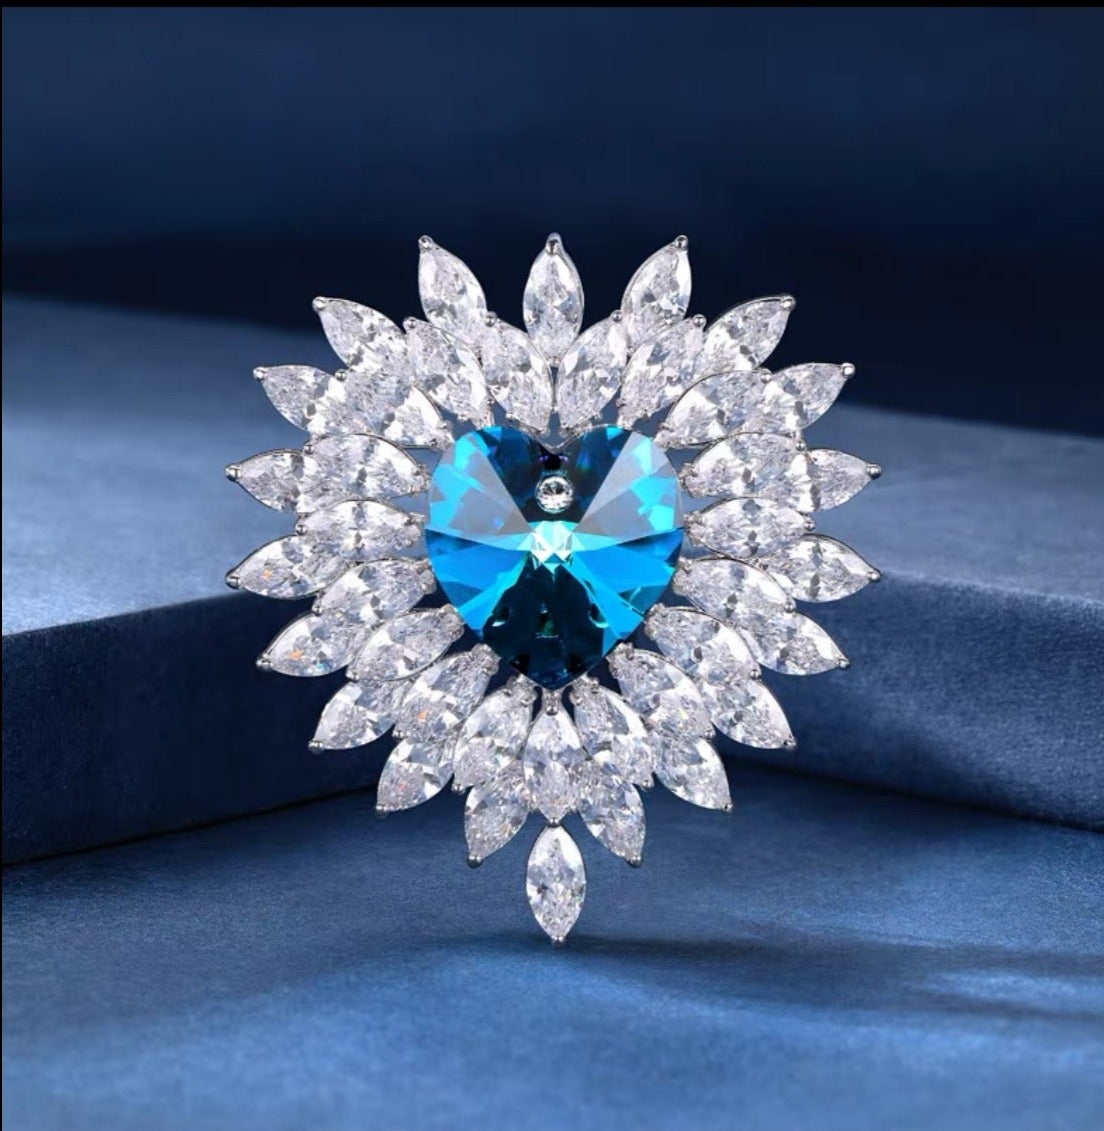 The Queen Crystal Heart brooch